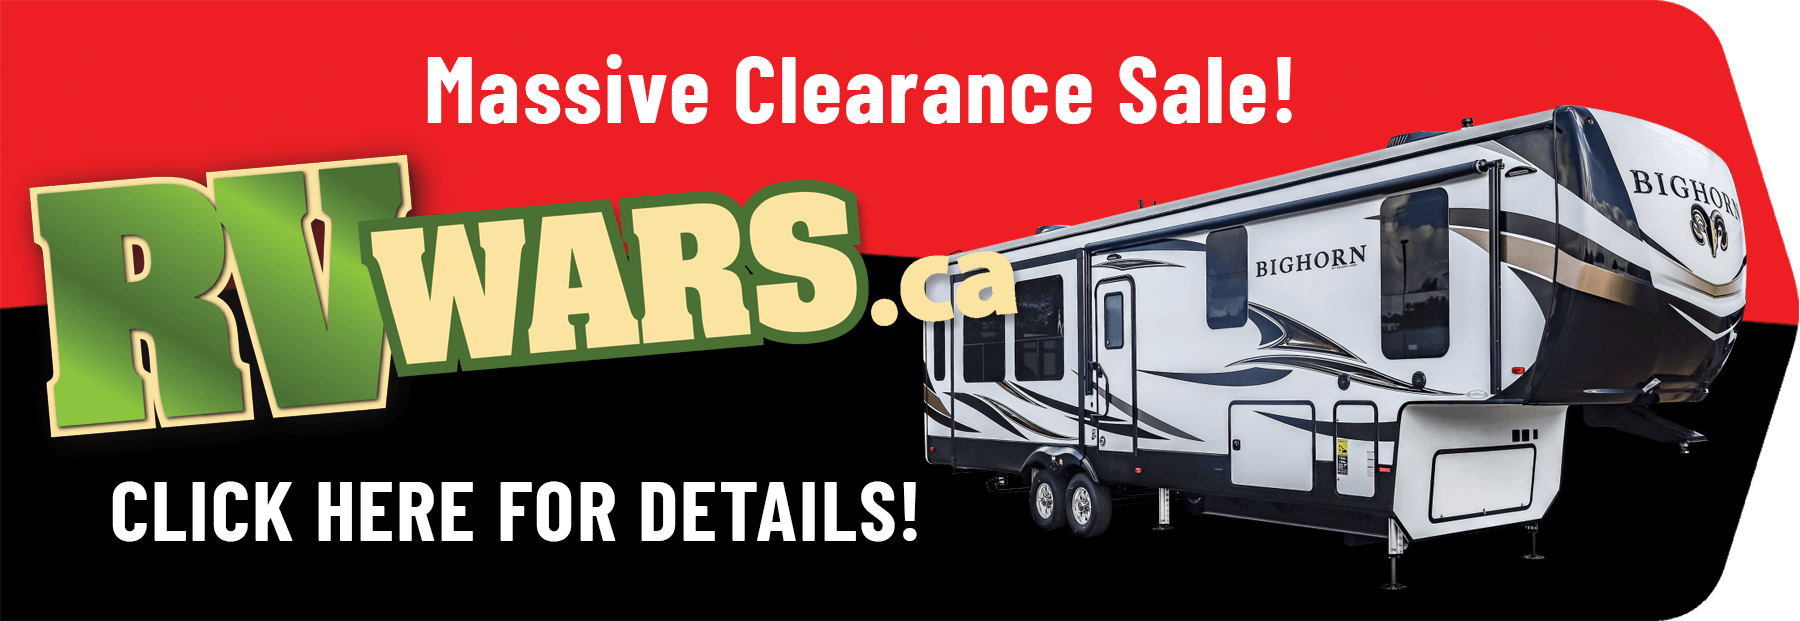 Clearance Sale - RV Wars